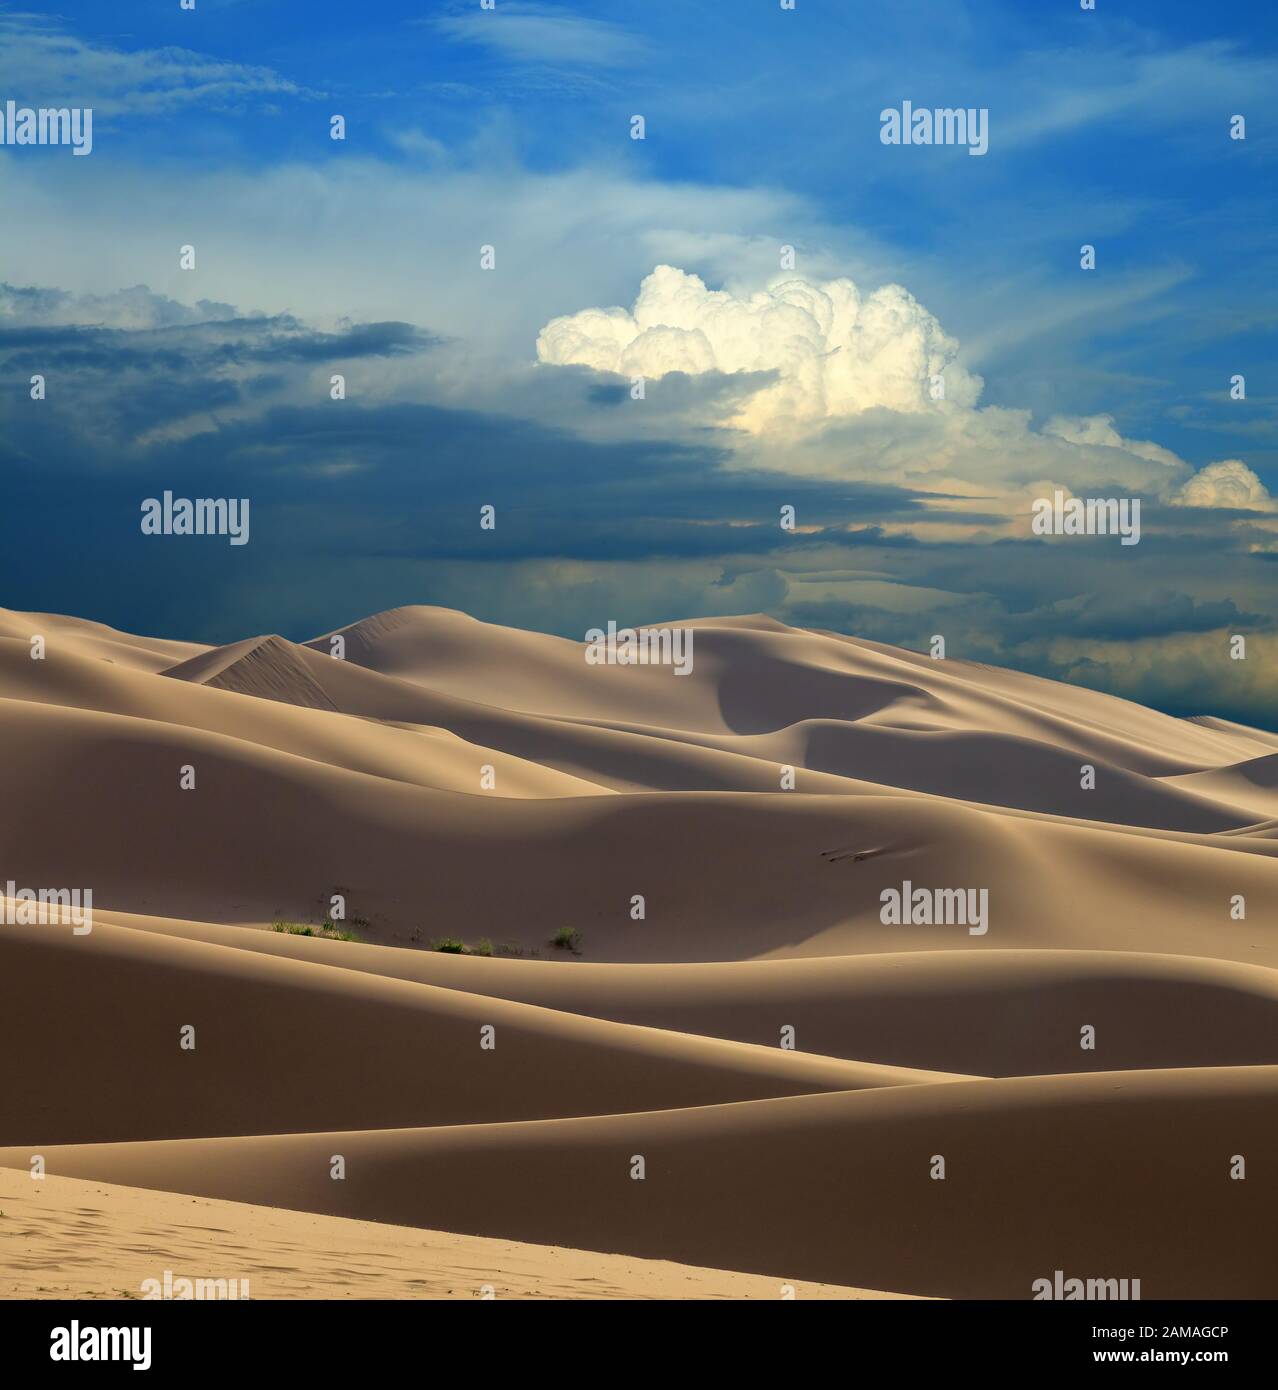 Sand dunes in desert at sunset Banque D'Images